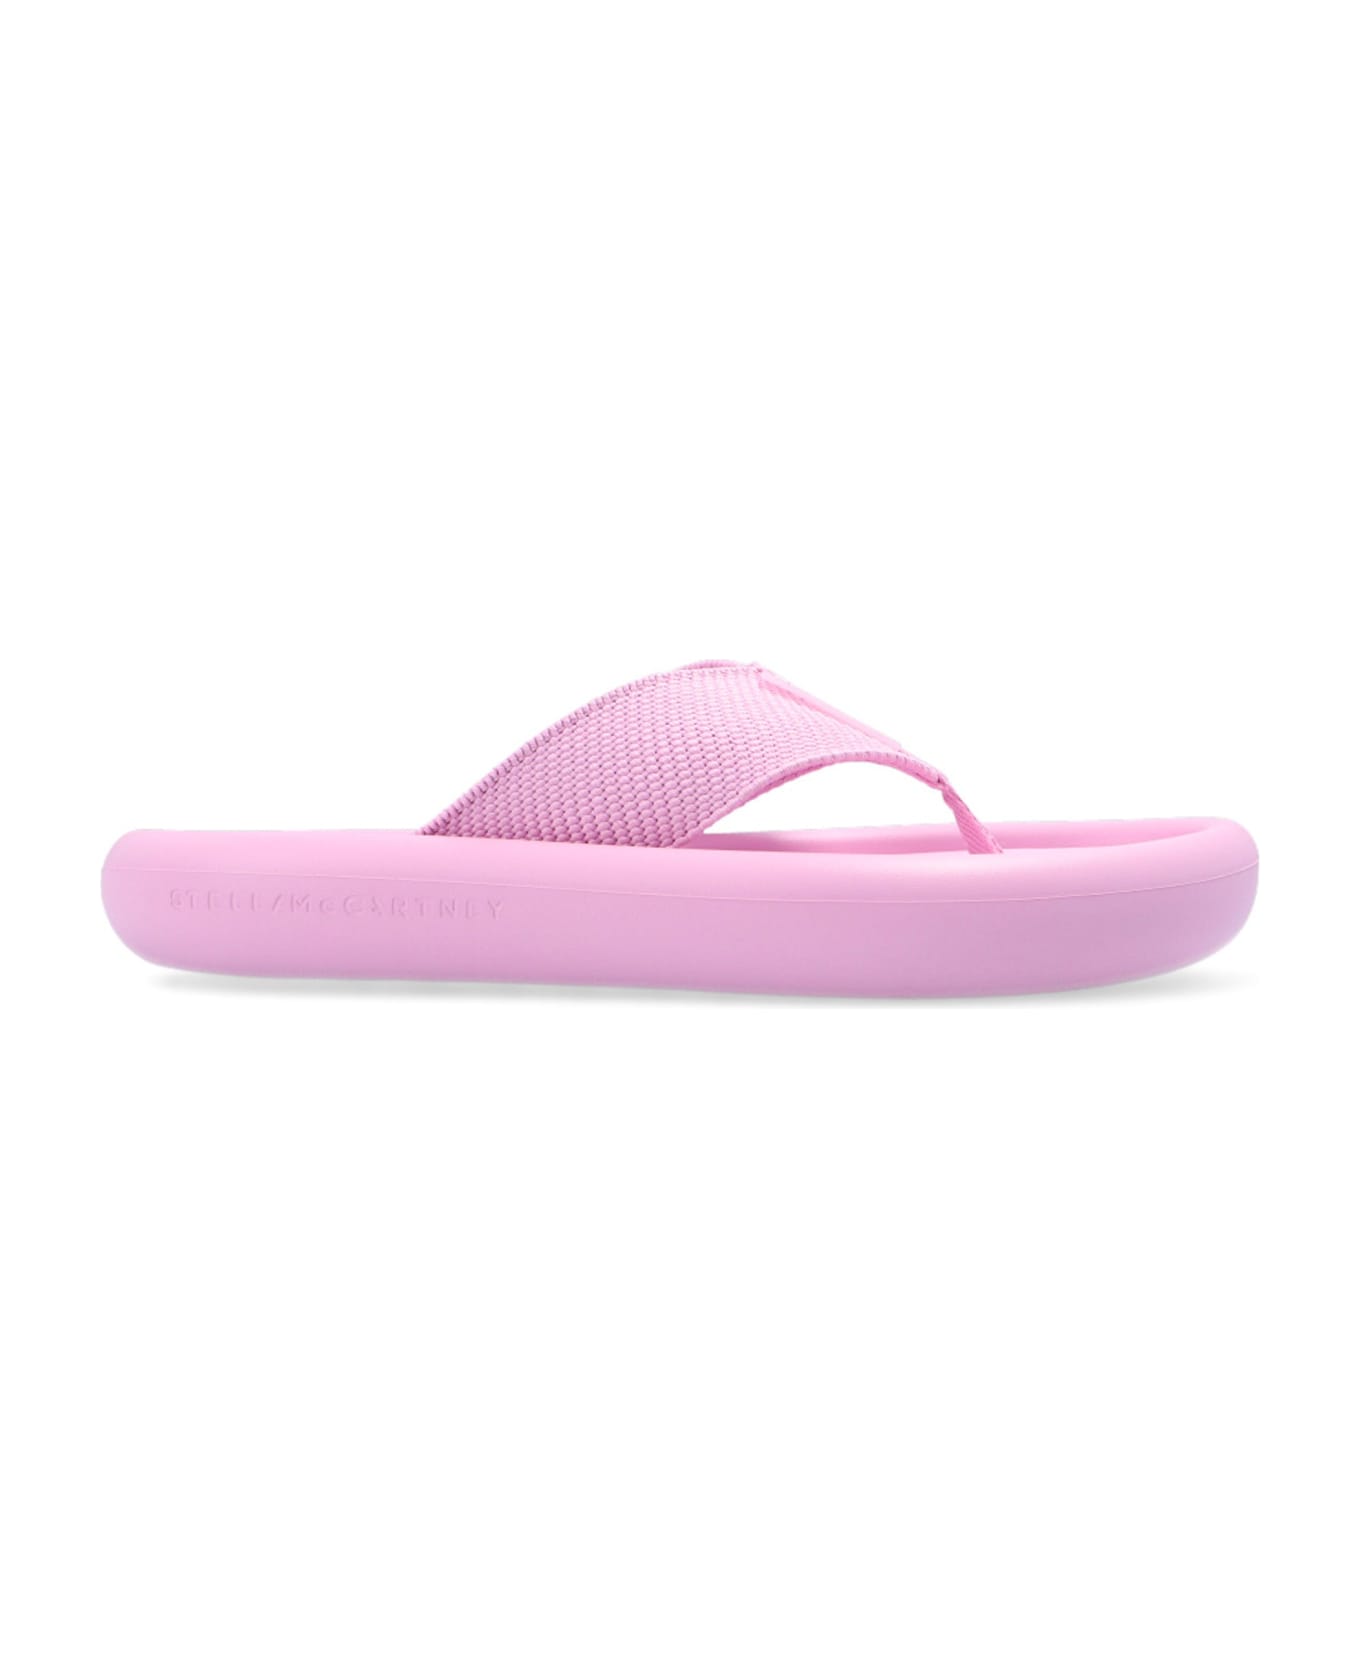 Stella McCartney Air Slides - Pink